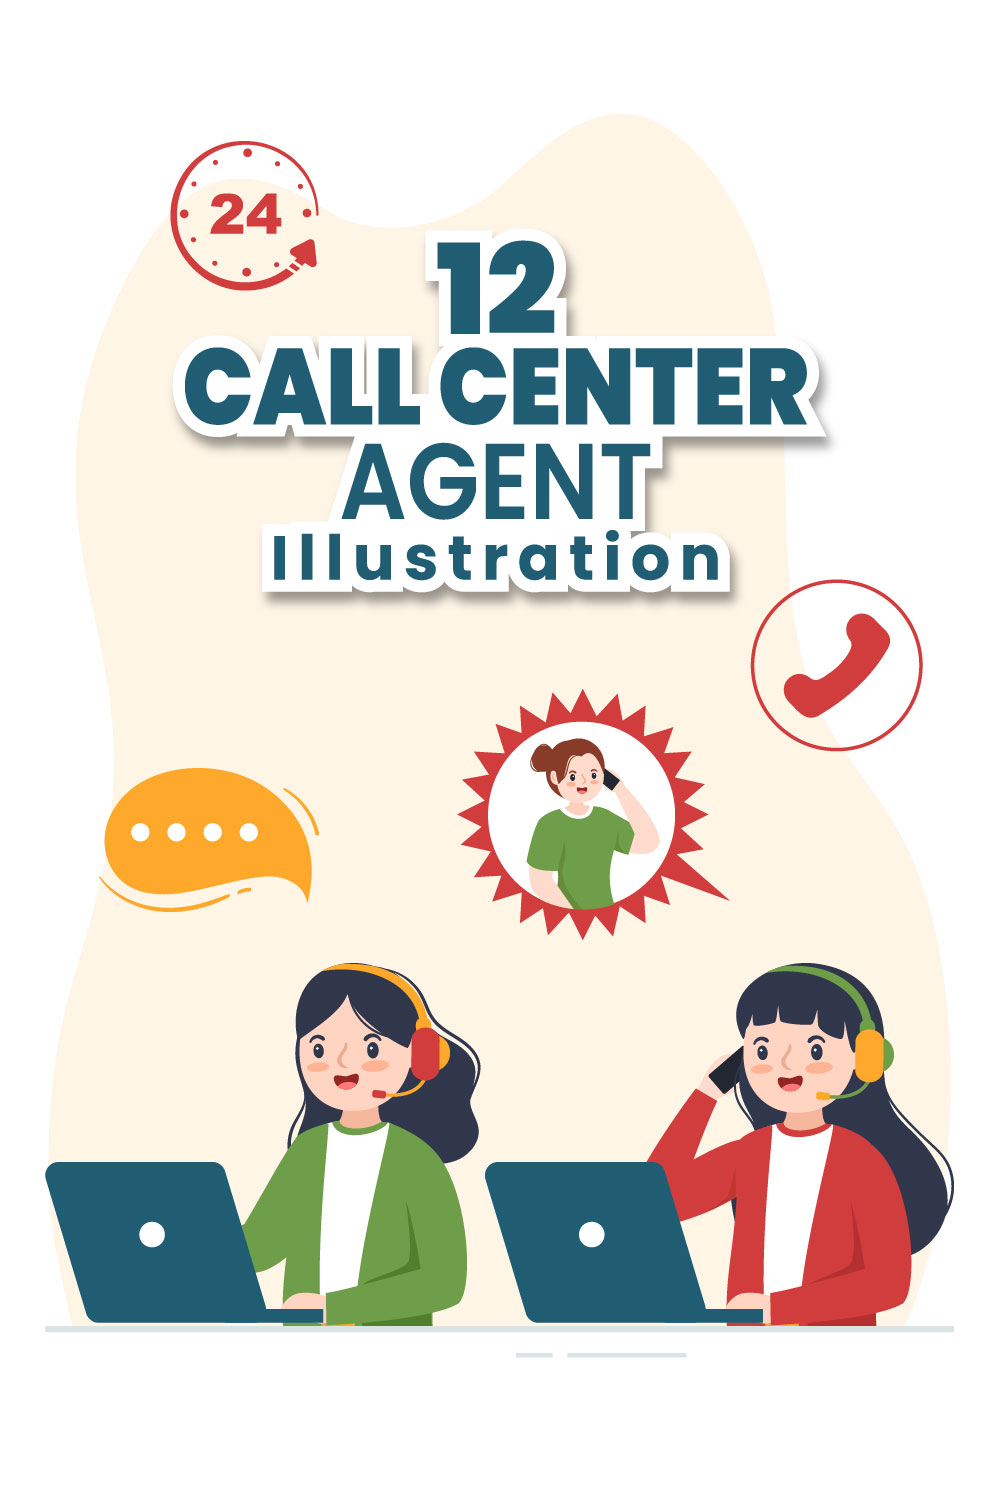 Call Center Agent Design Illustration pinterest image.